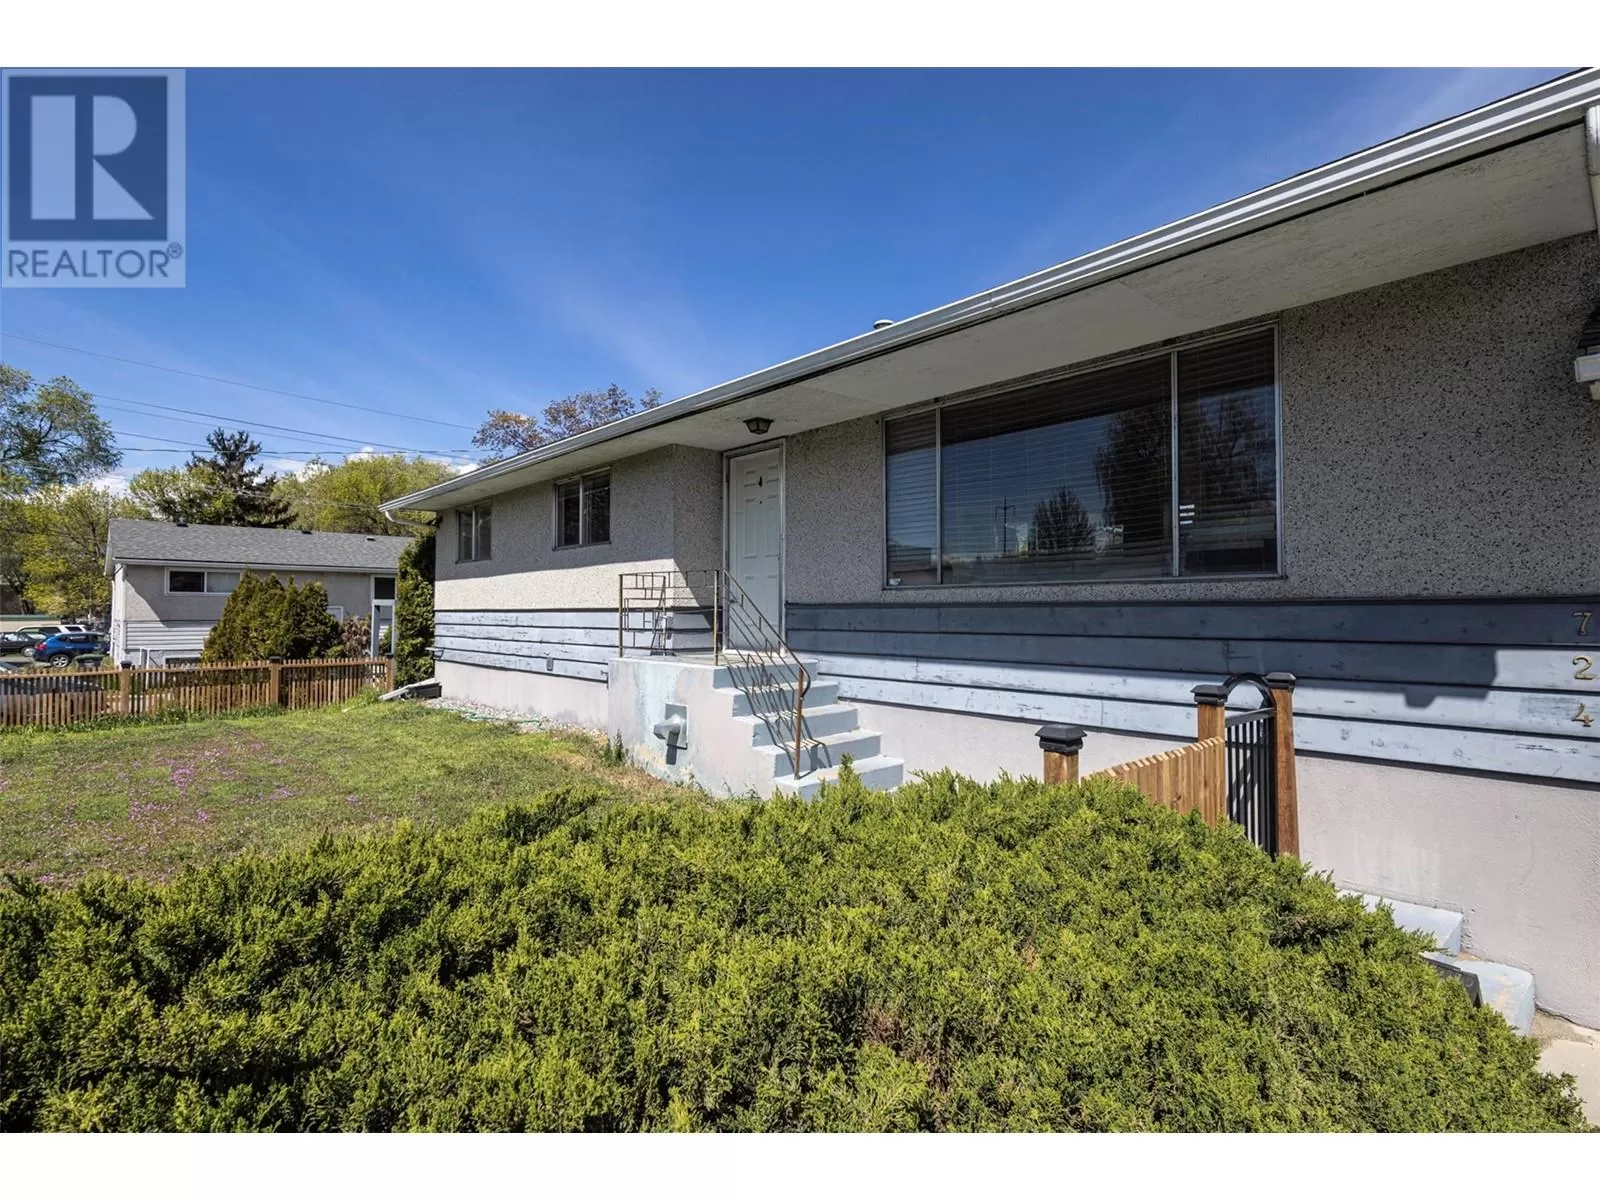 House for rent: 724 Kinnear Avenue, Kelowna, British Columbia V1Y 5B1